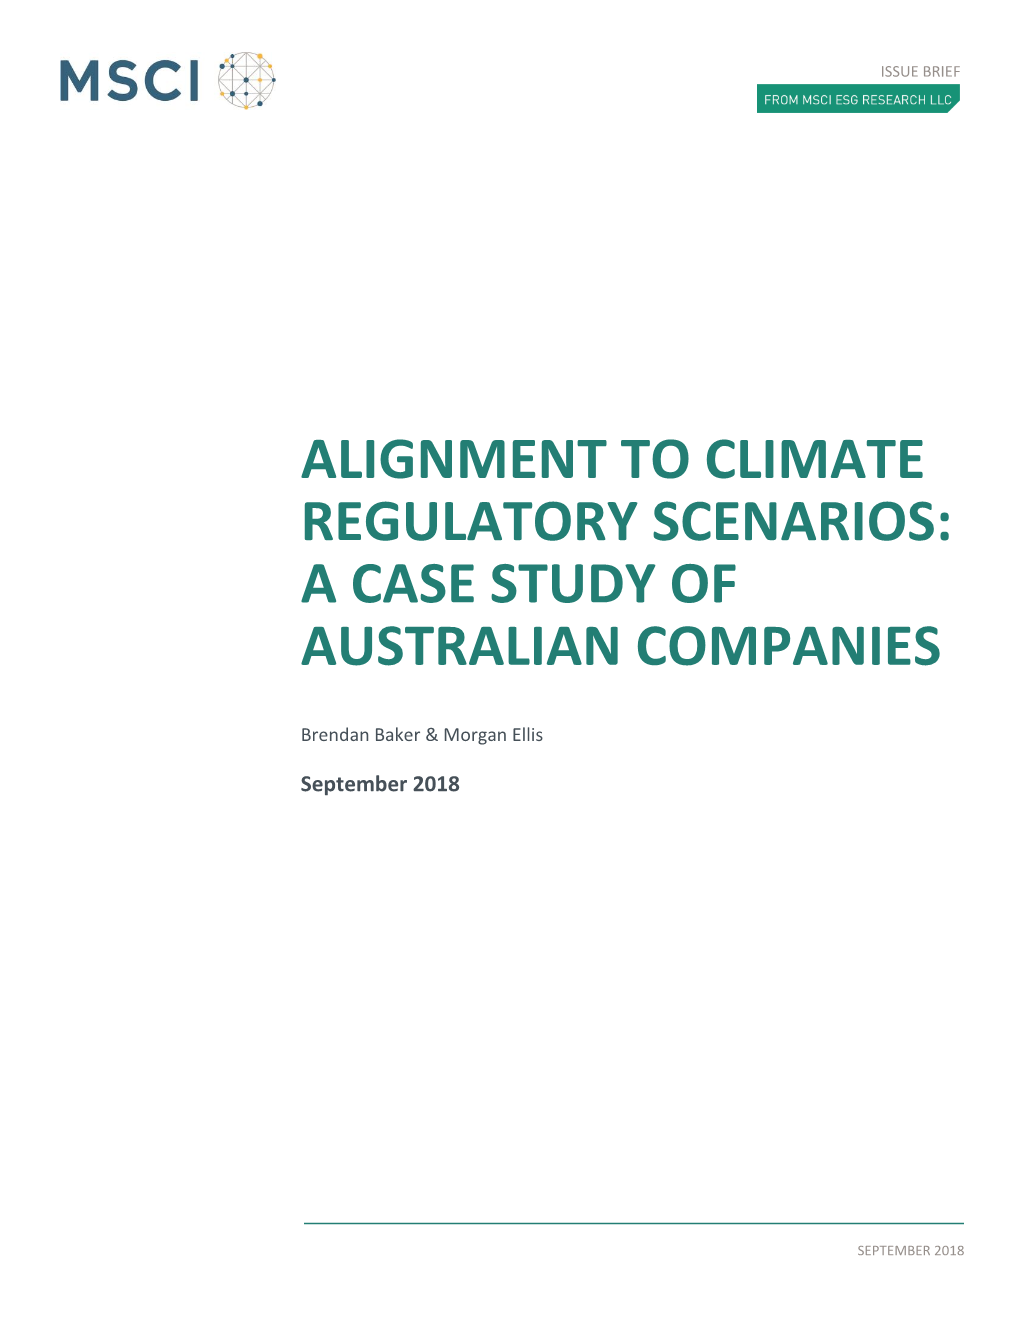 Alignment to Climate Regulatory Scenarios: a Case Study of Australian Companies